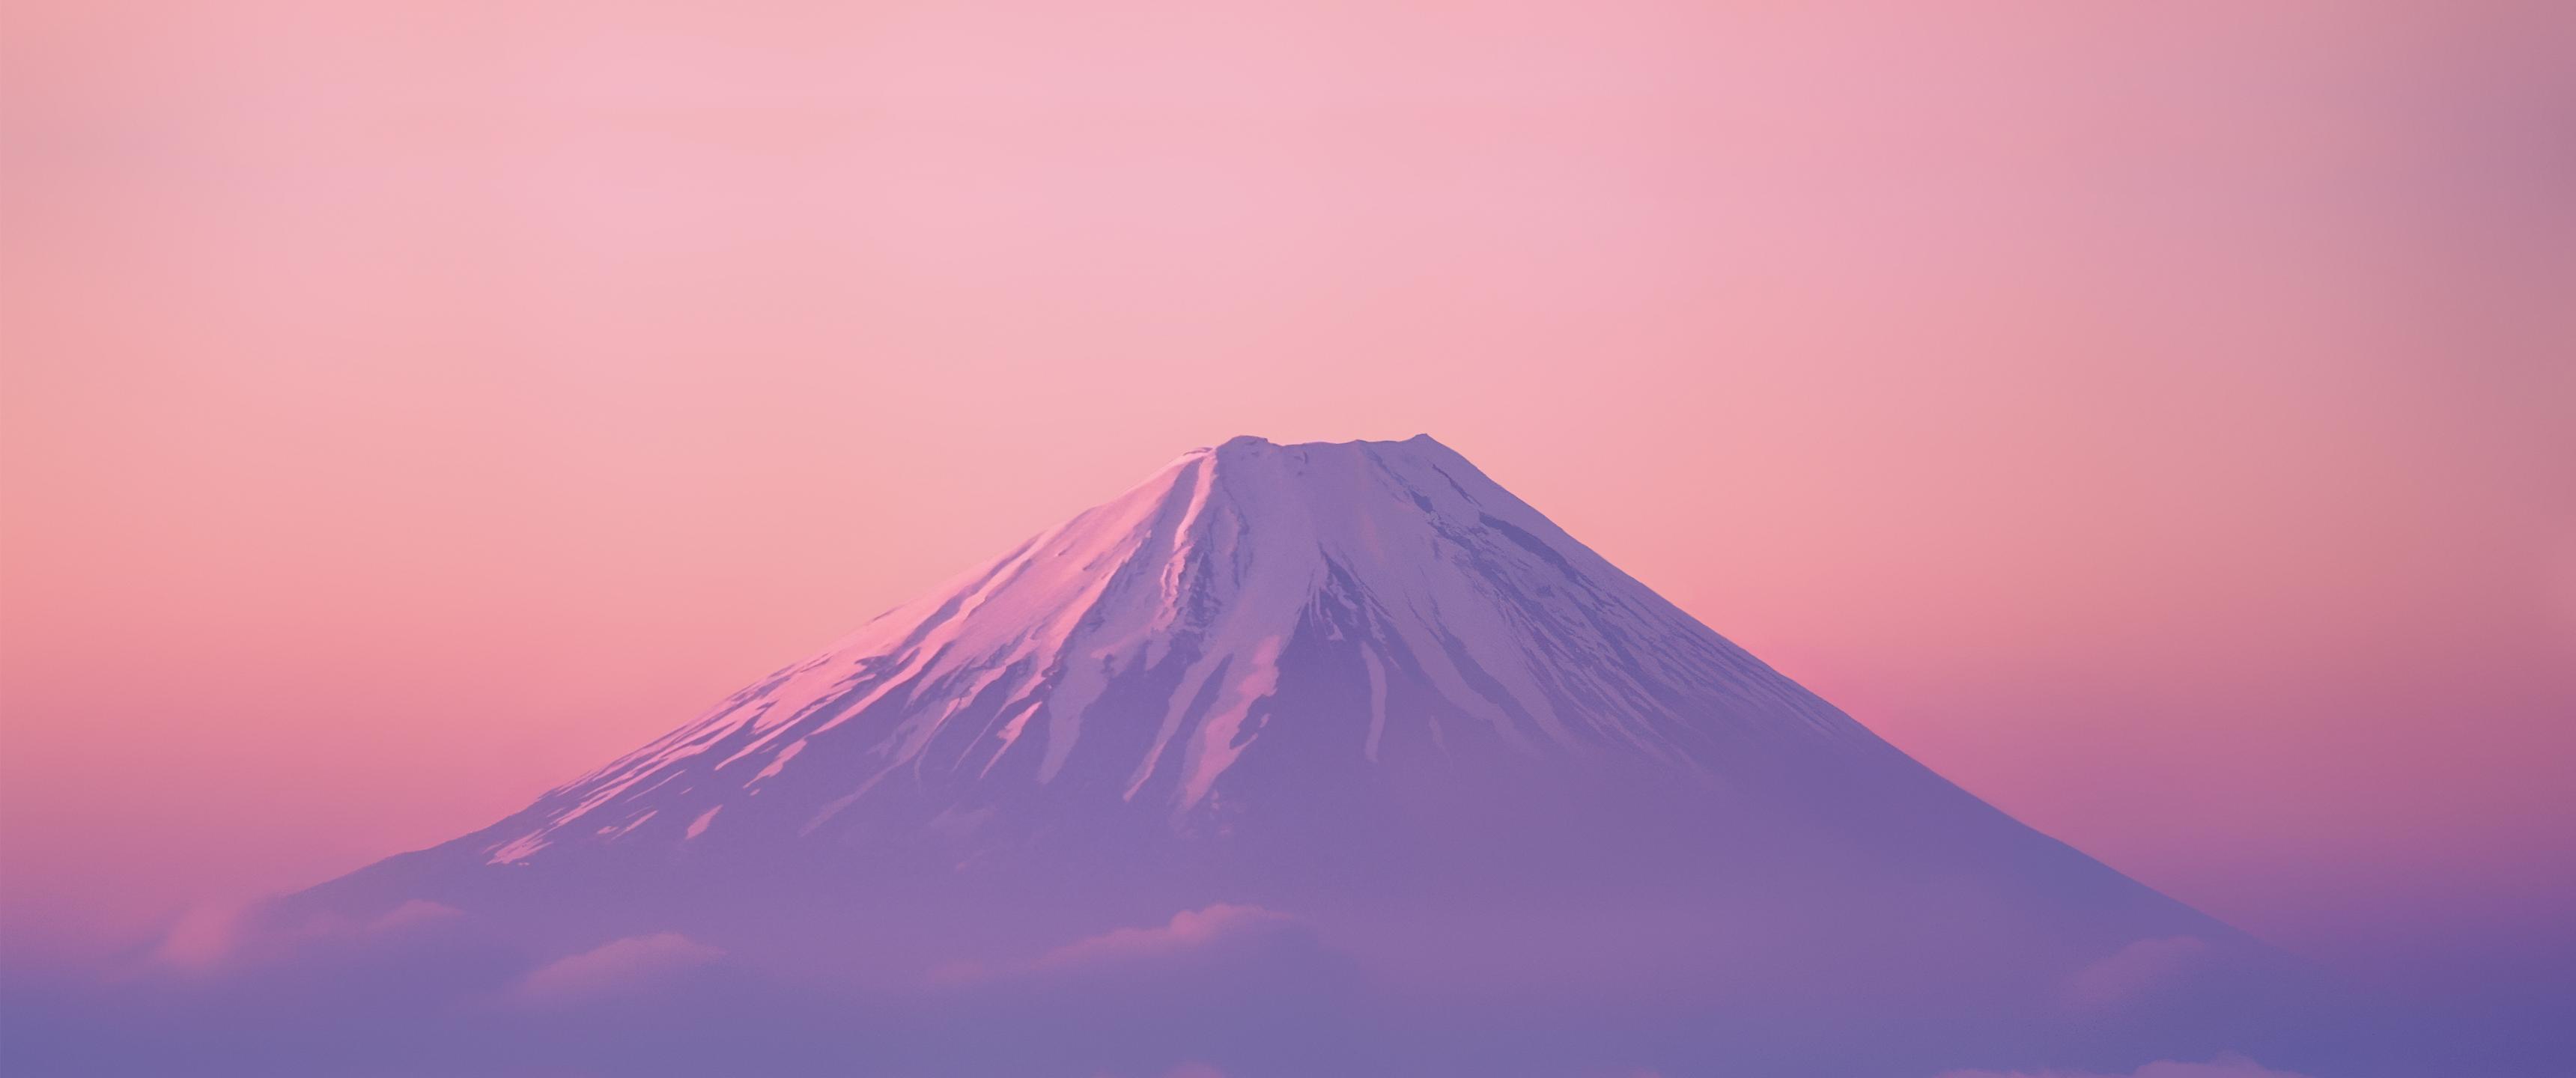 Ultrawide Mountains Mount Fuji Japan 3440x1440